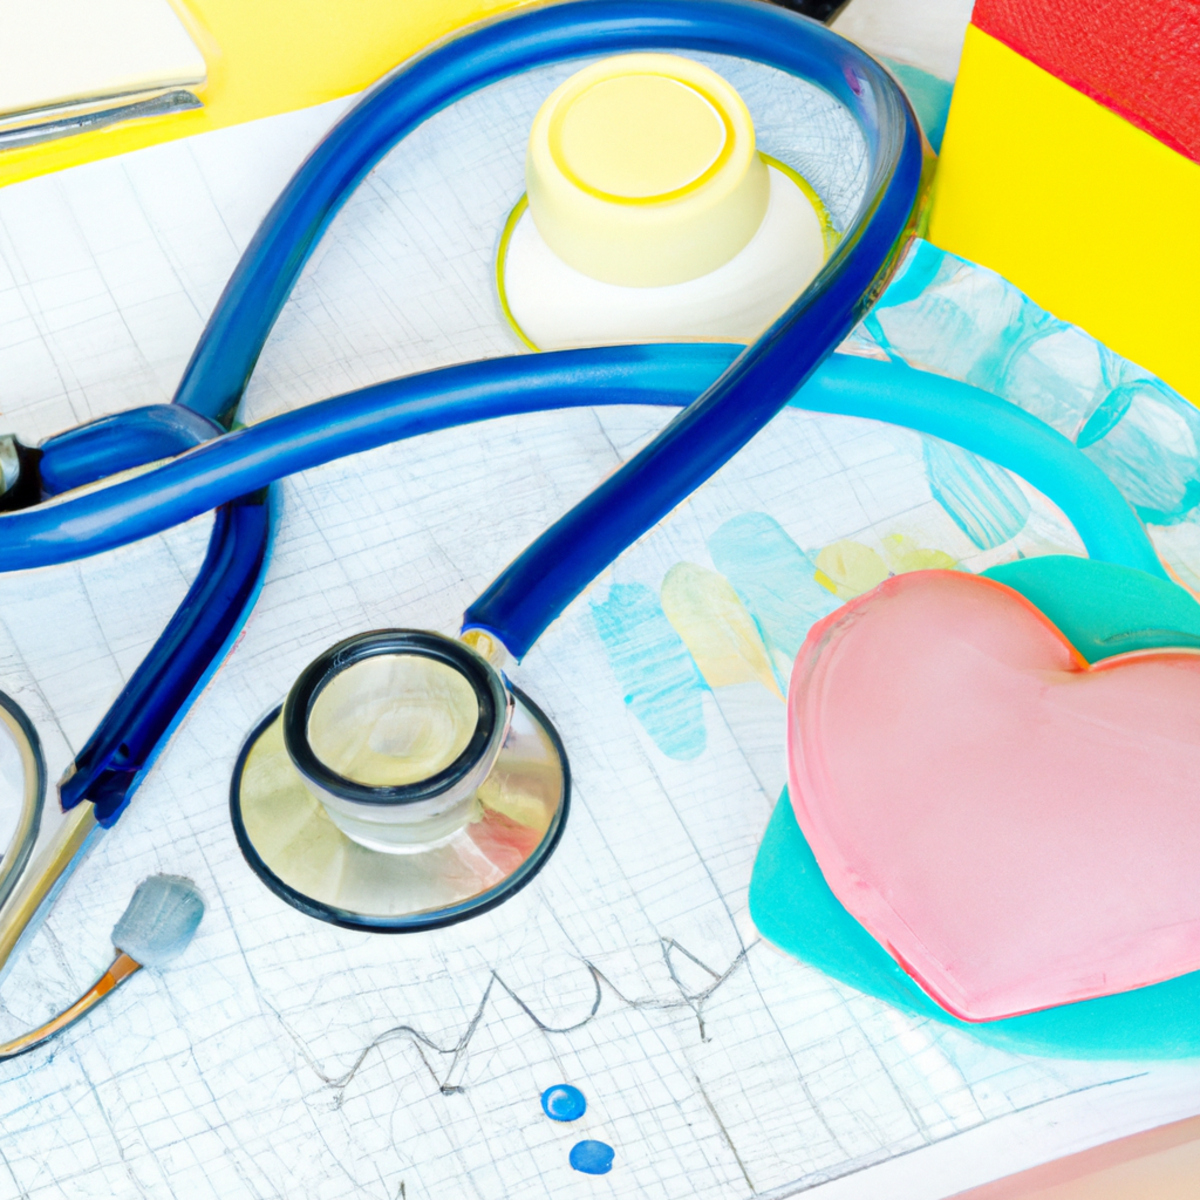 Medical tools and equipment symbolize heart protection strategies - Kawasaki Disease